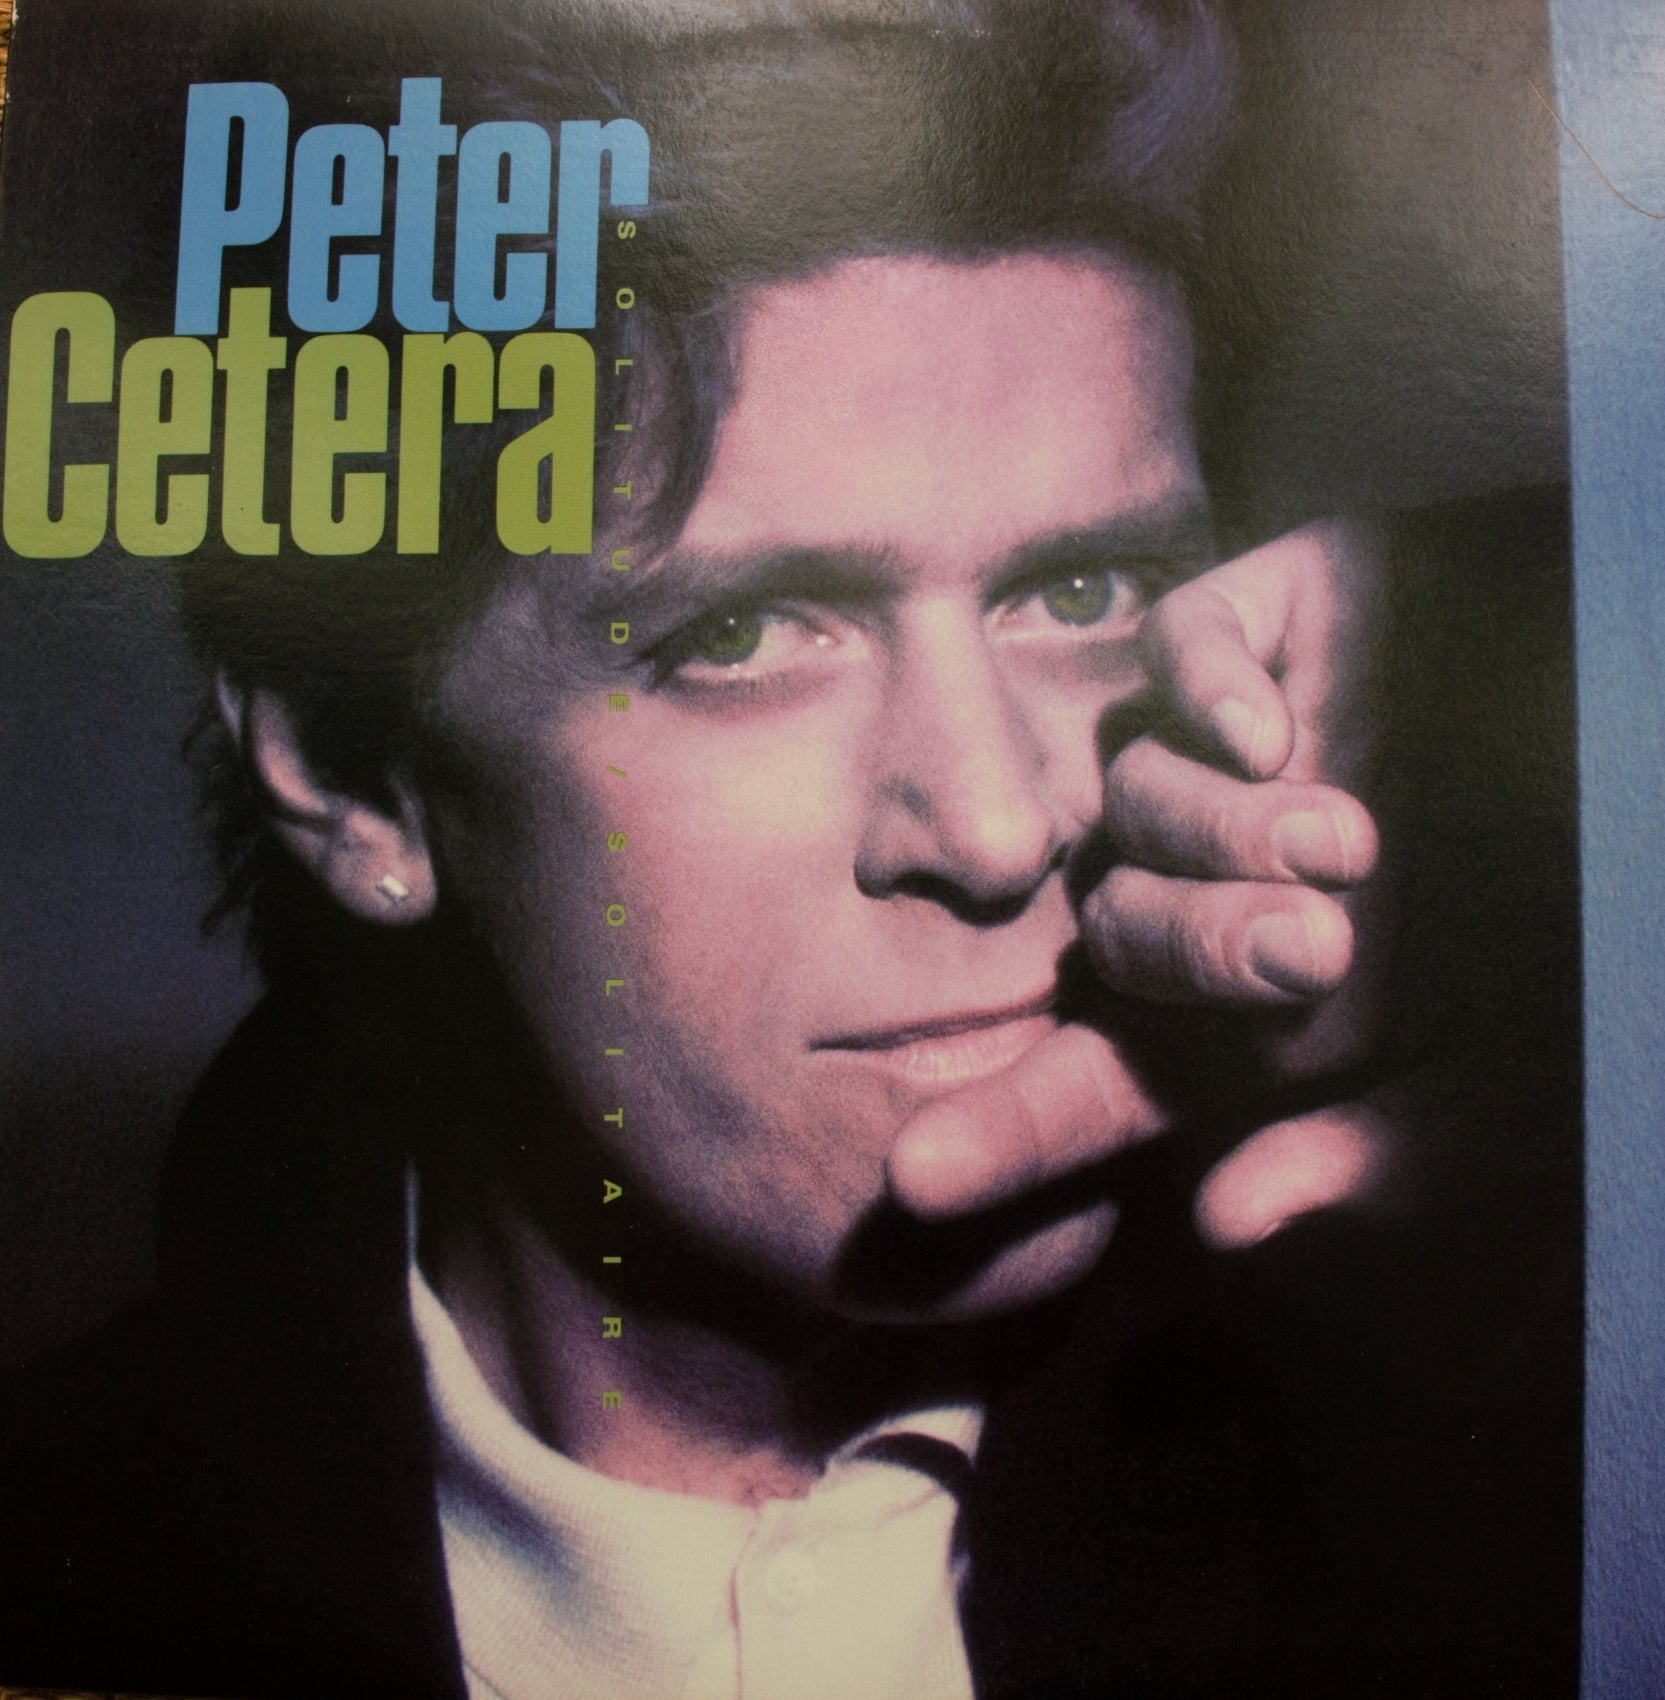 WBR001: Peter Cetera